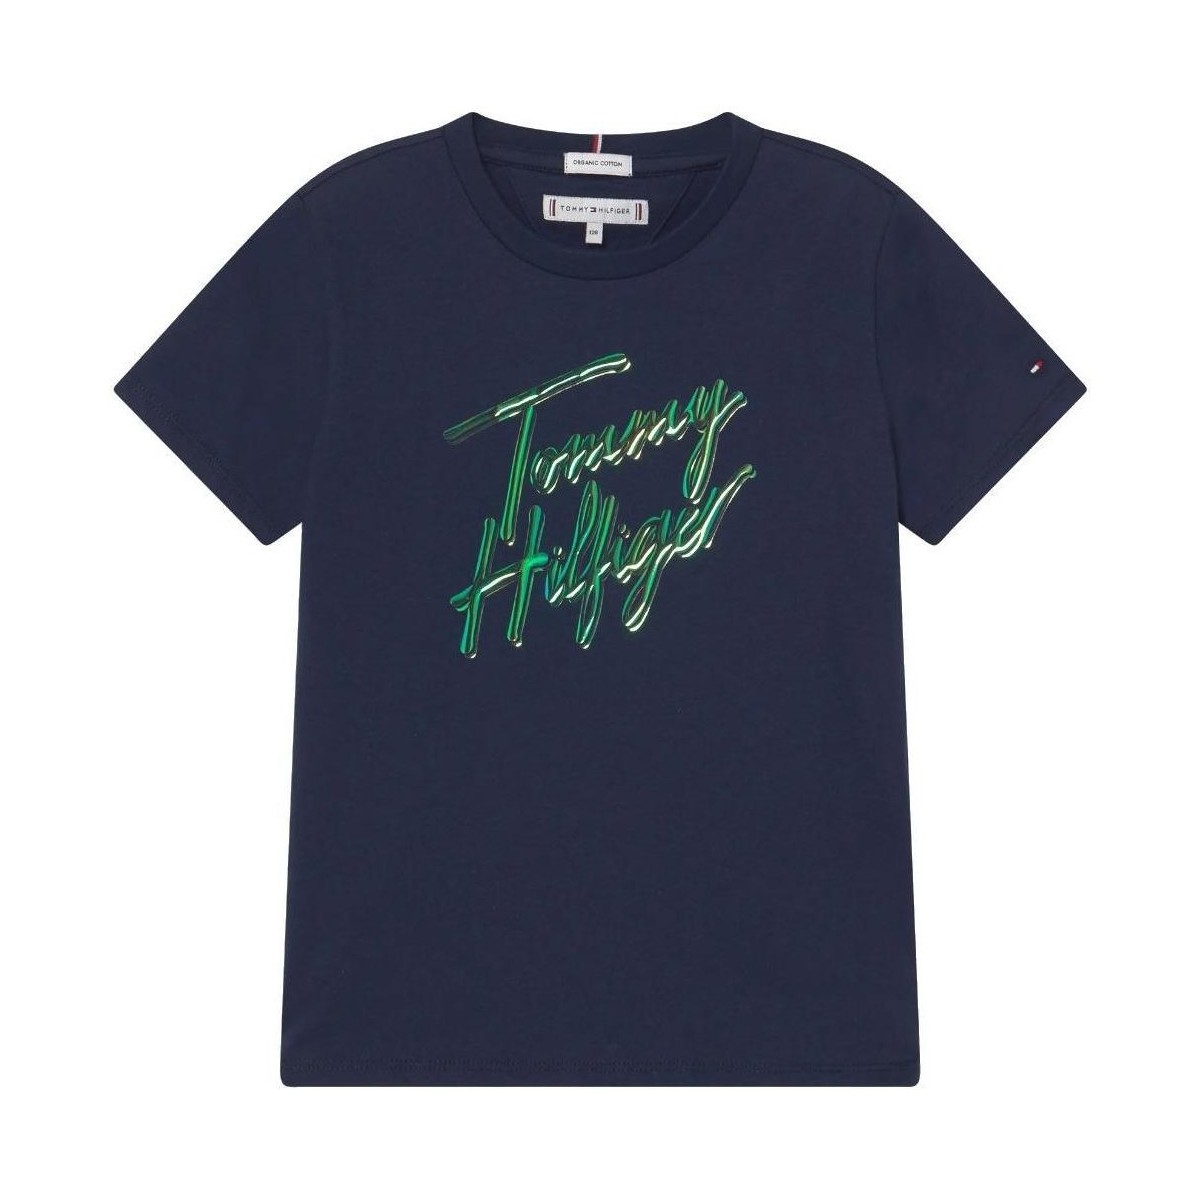 Tommy Hilfiger  T-shirt με κοντά μανίκια Tommy Hilfiger -